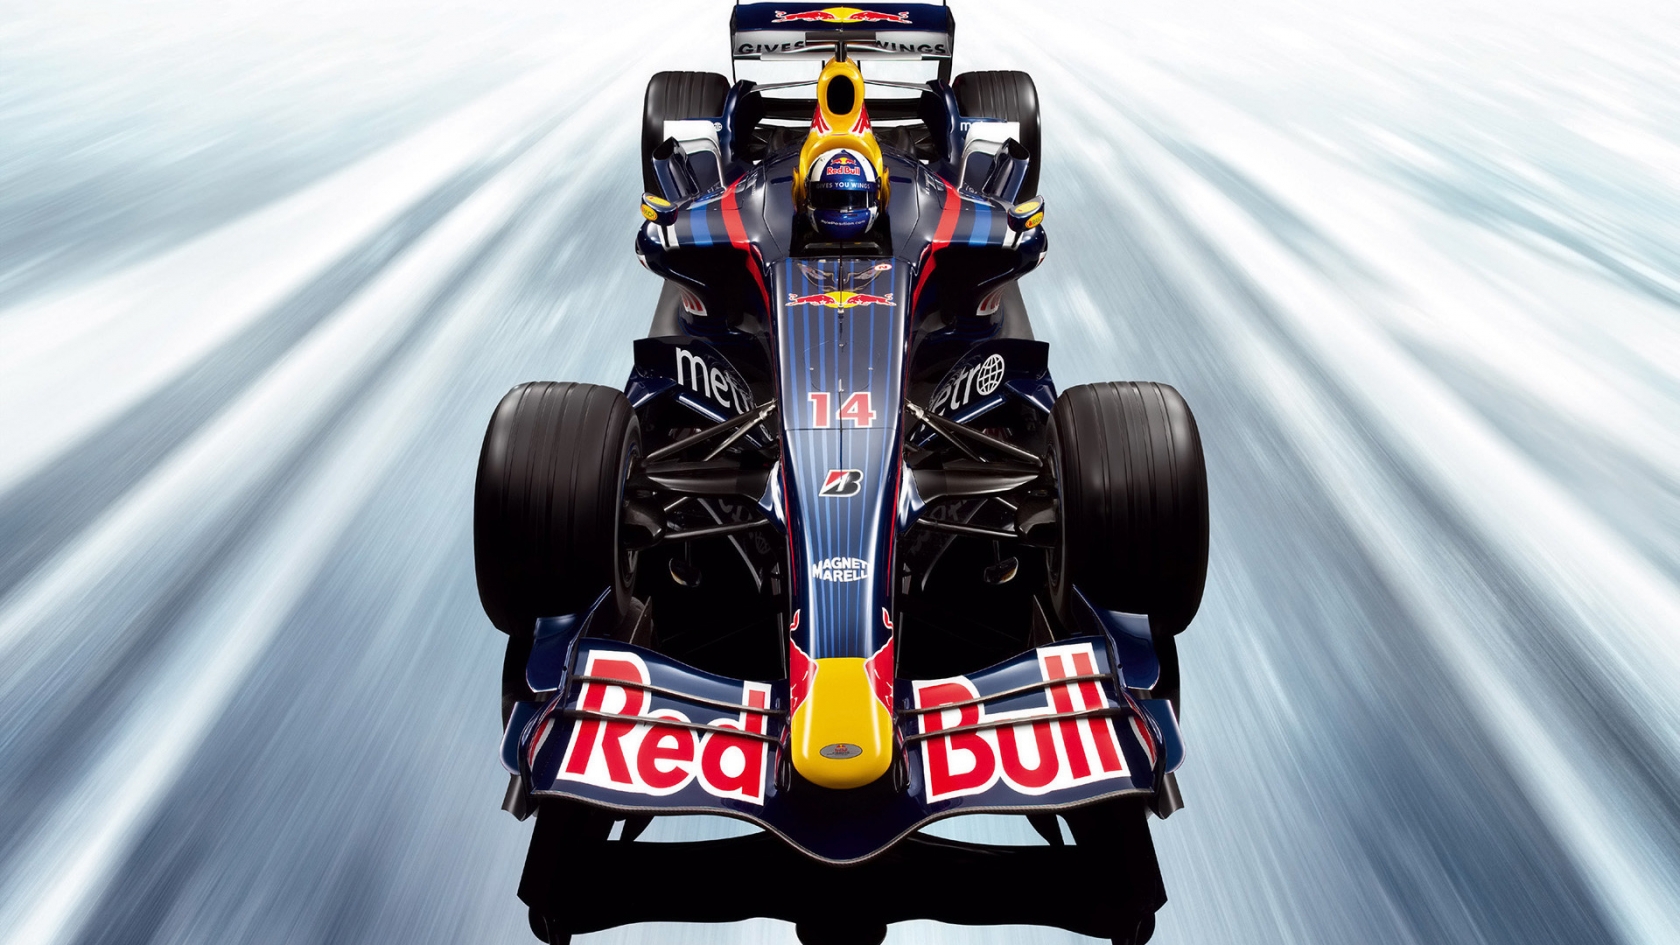 Red Bull RB3 F1 Studio Front for 1680 x 945 HDTV resolution